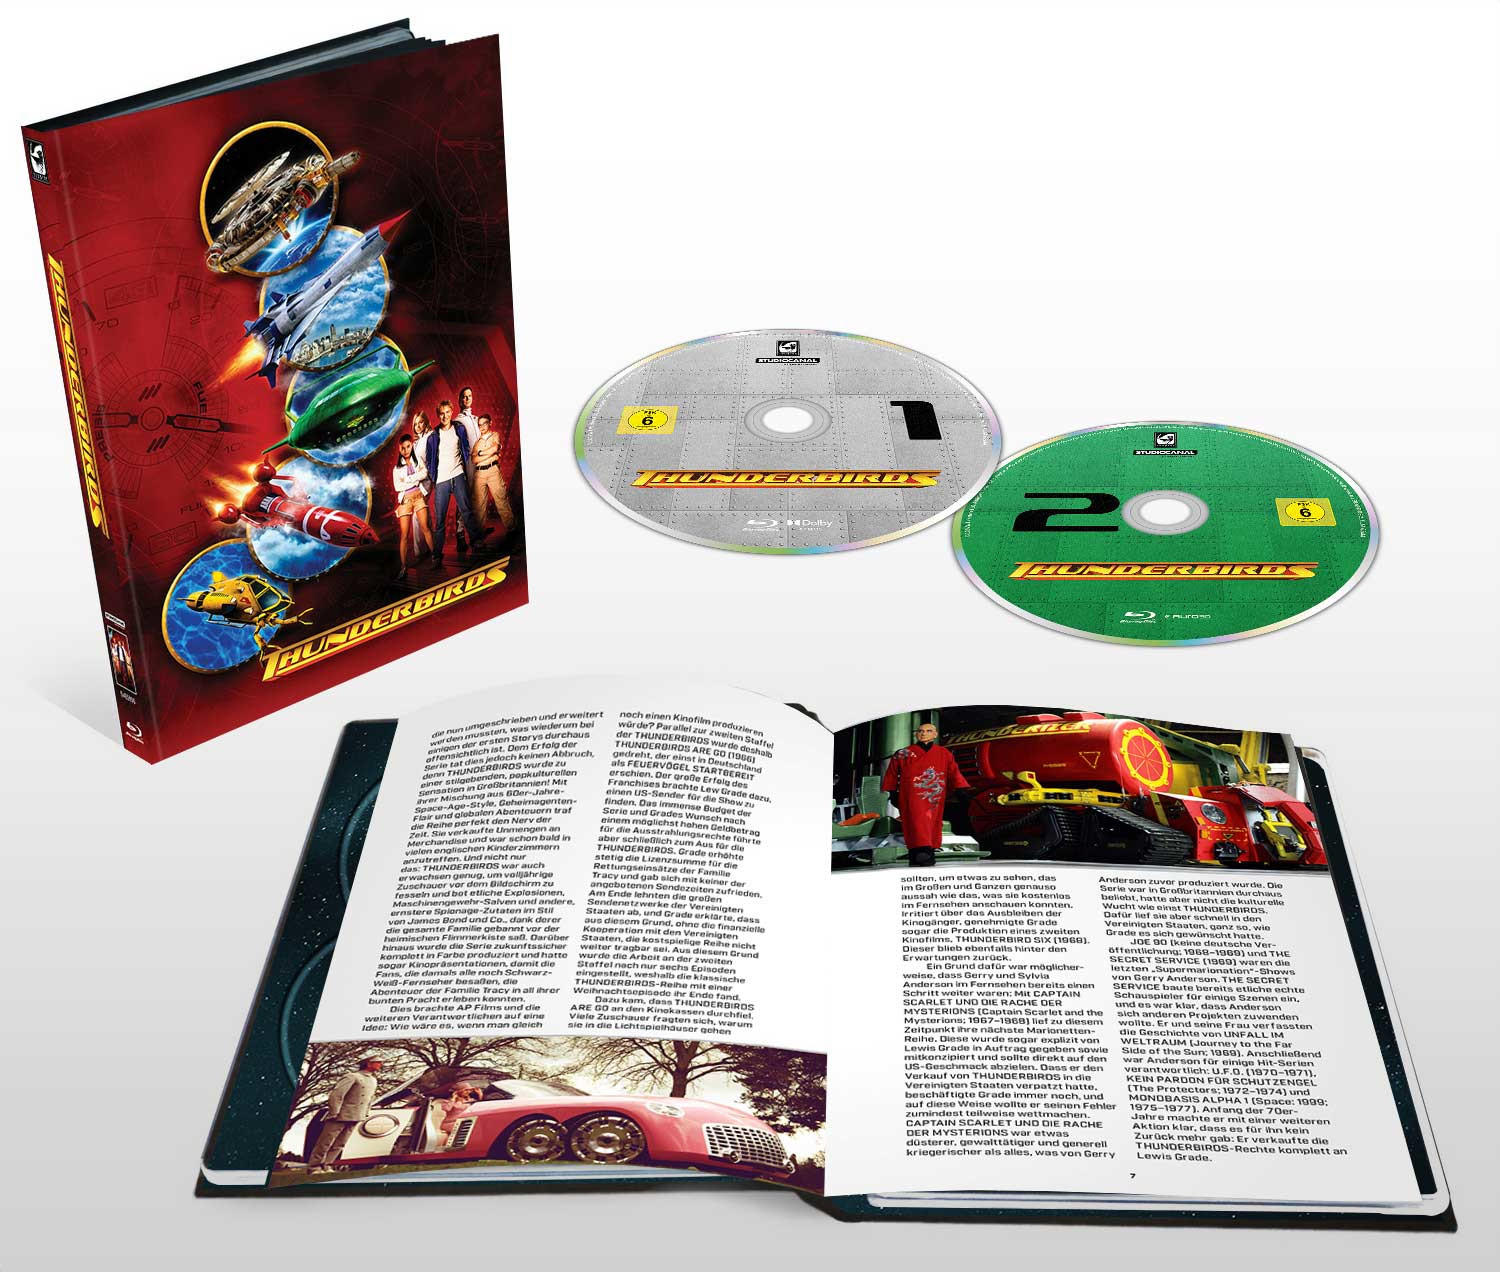 Thunderbirds Blu-ray